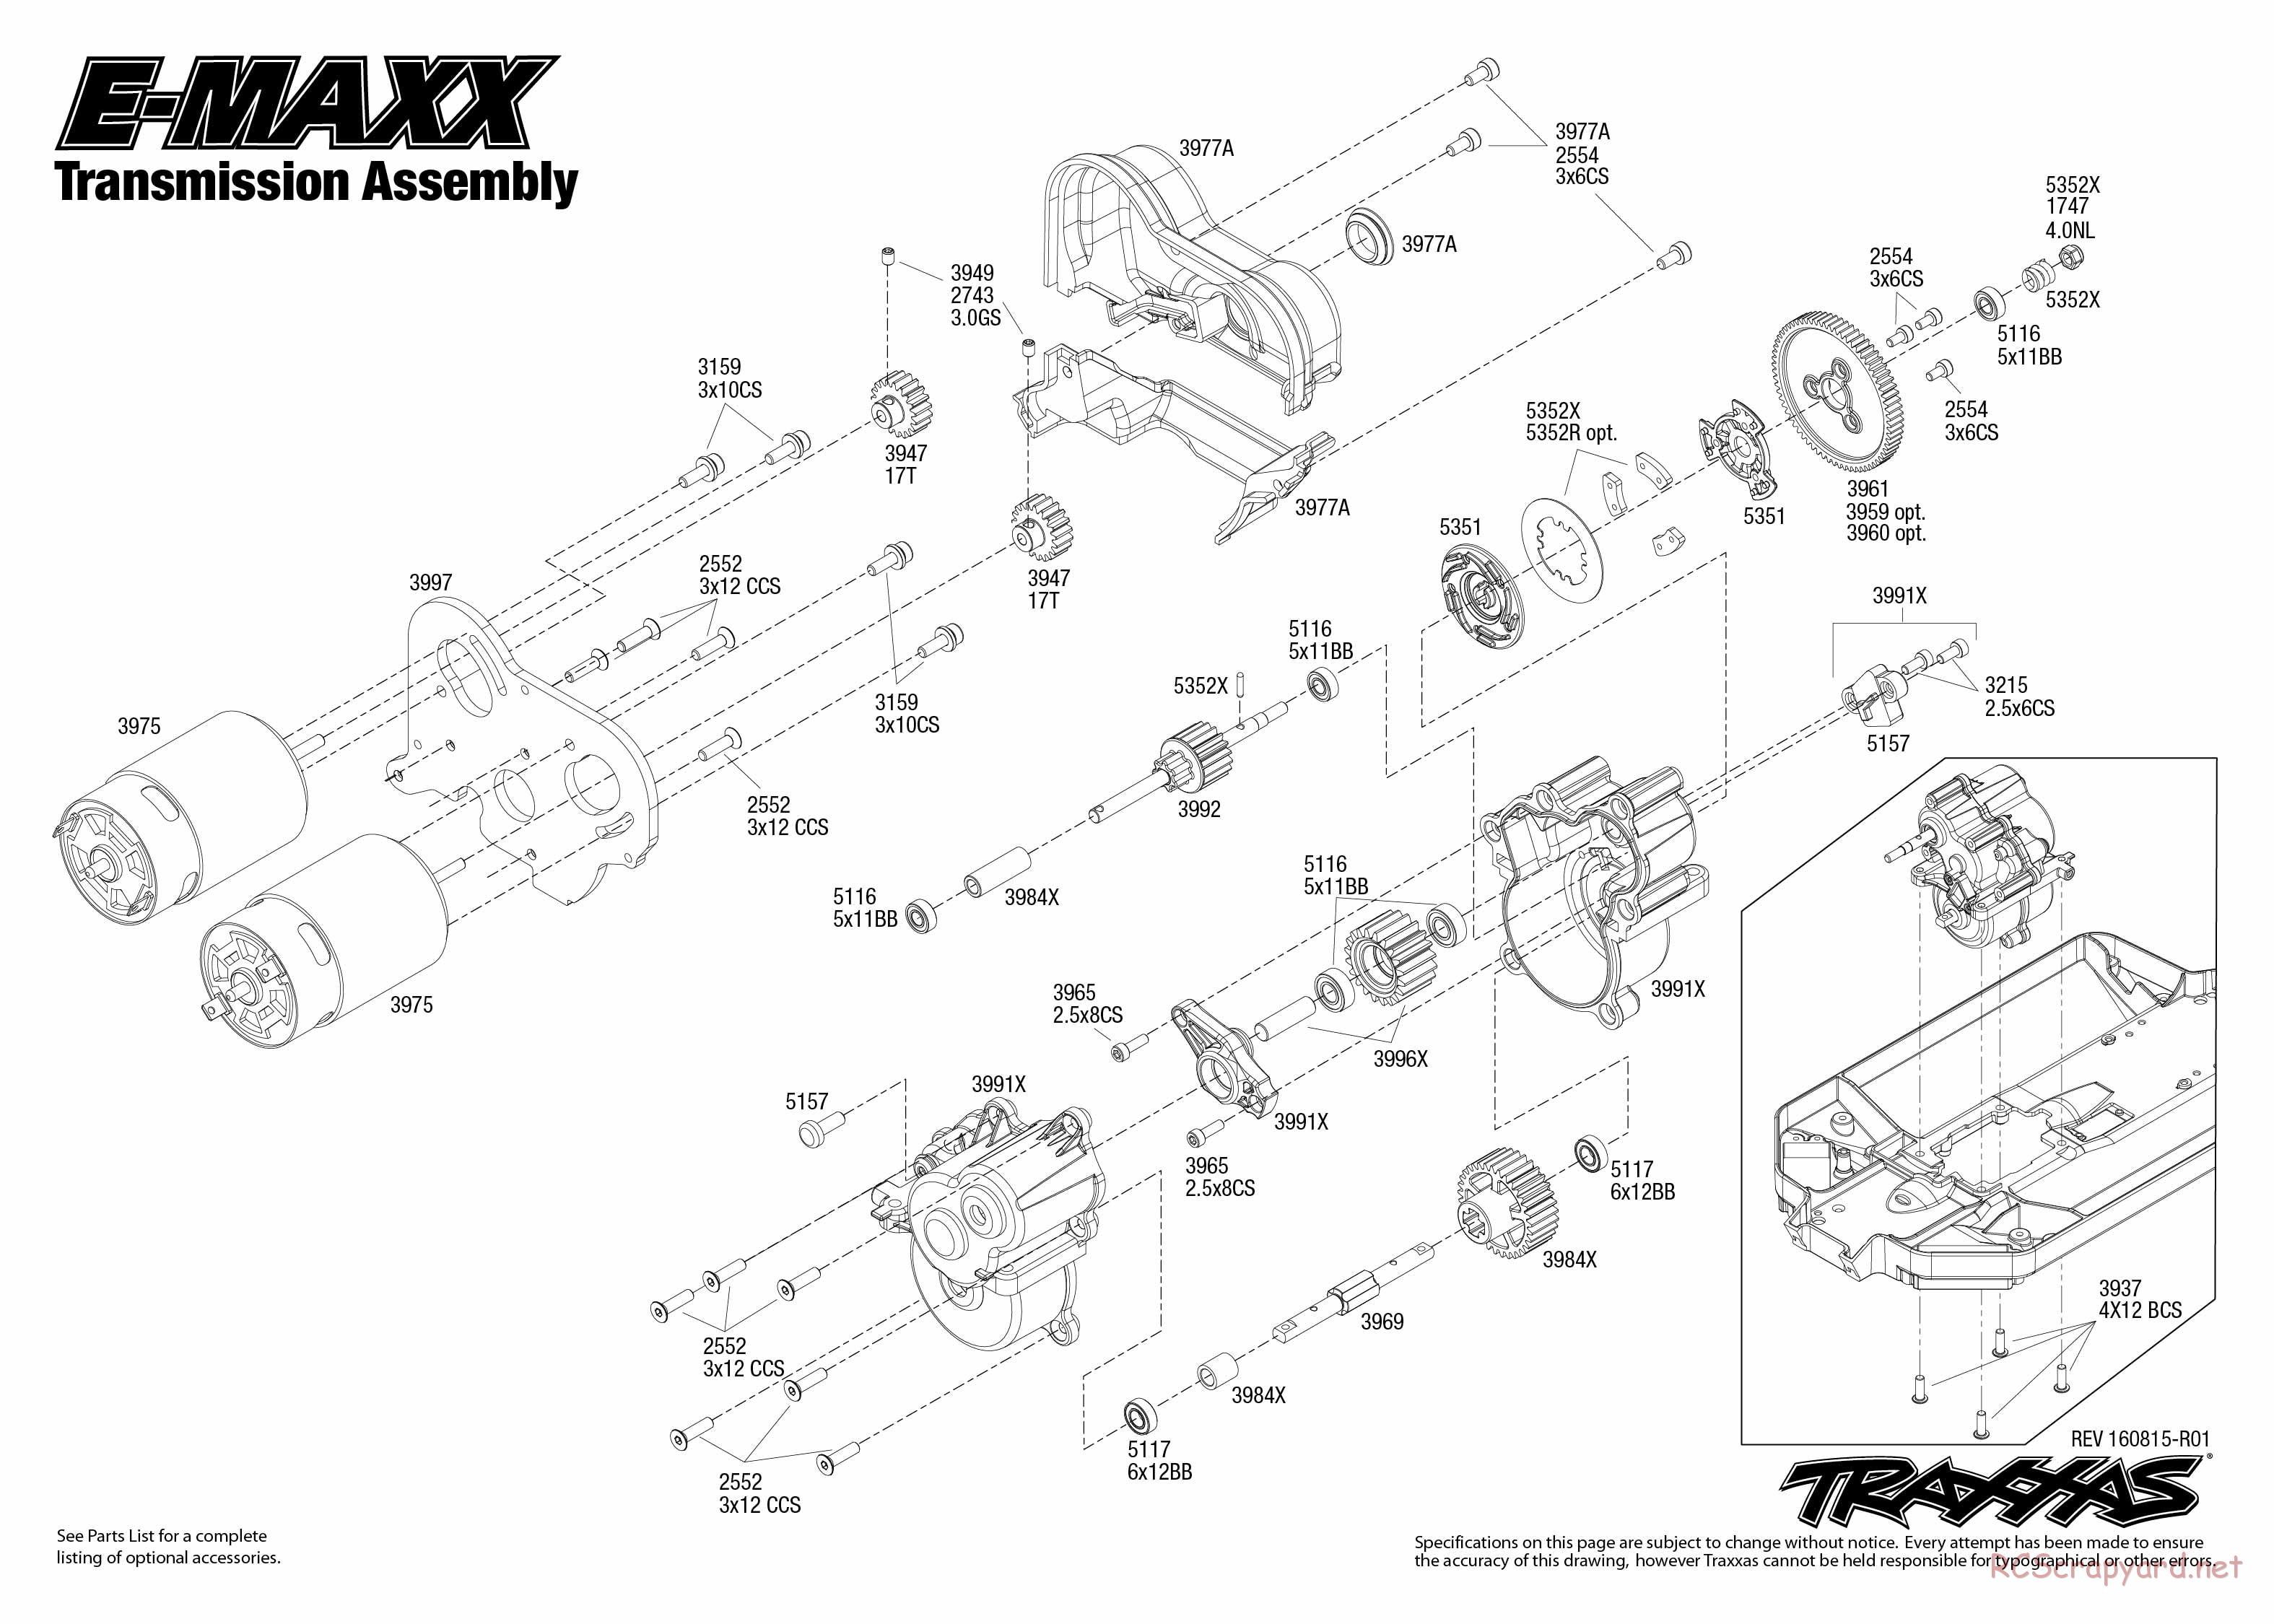 Traxxas - E-Maxx (2015) - Exploded Views - Page 4